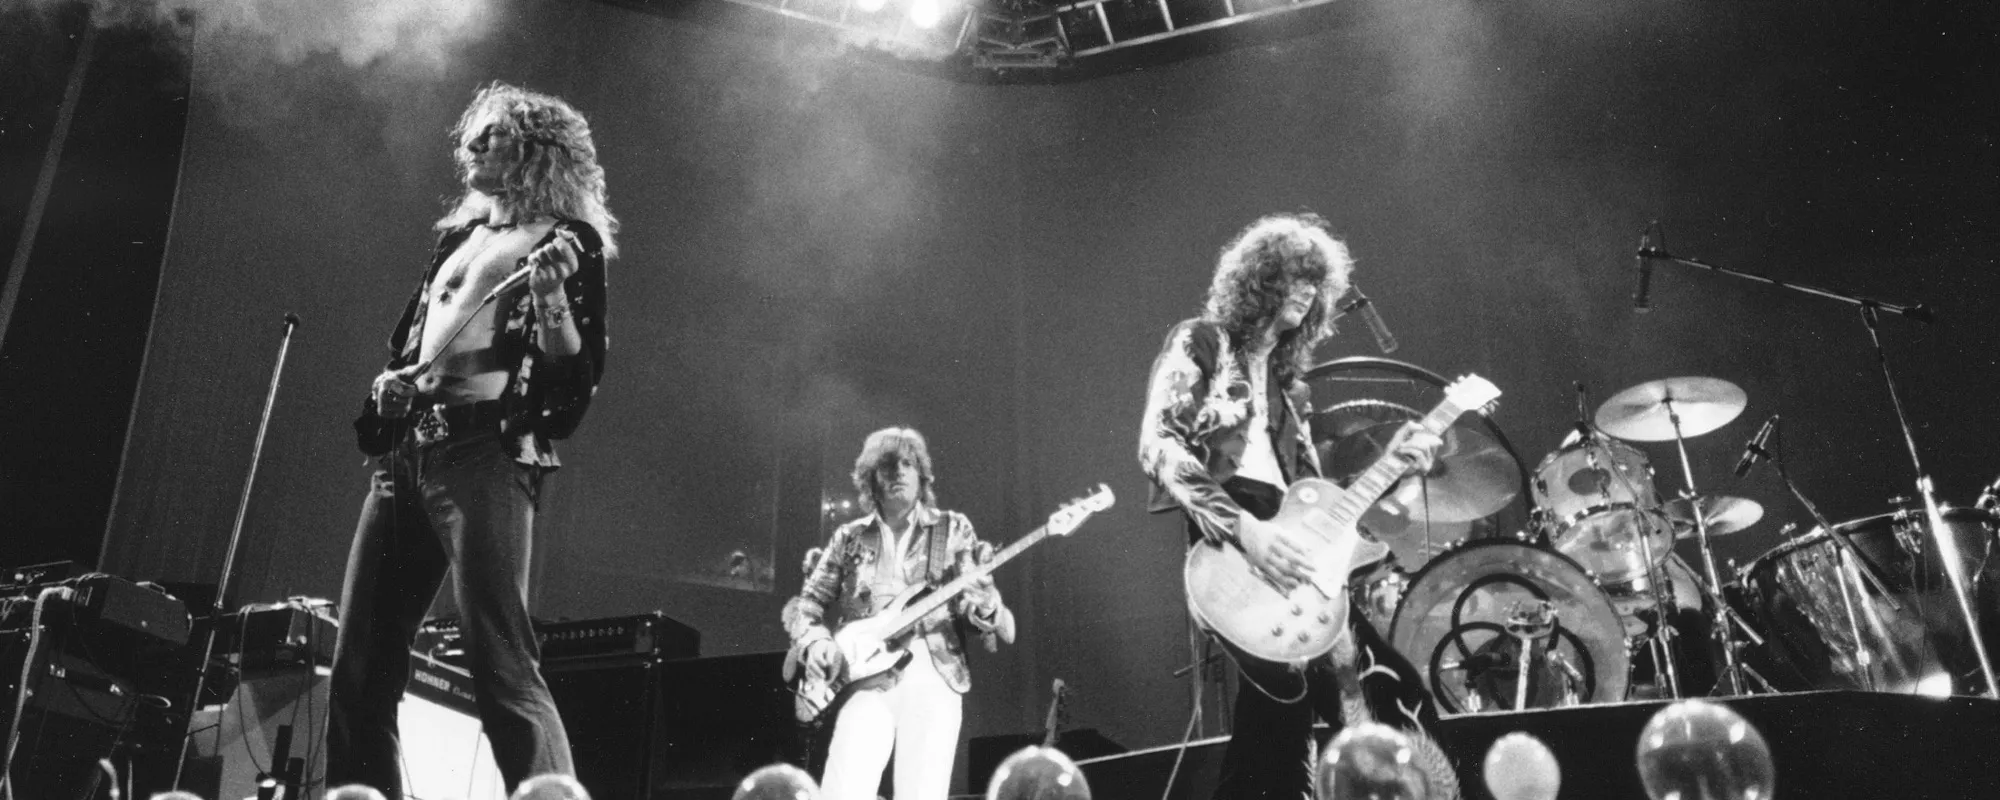 Ranking All the Songs on ‘Led Zeppelin IV’